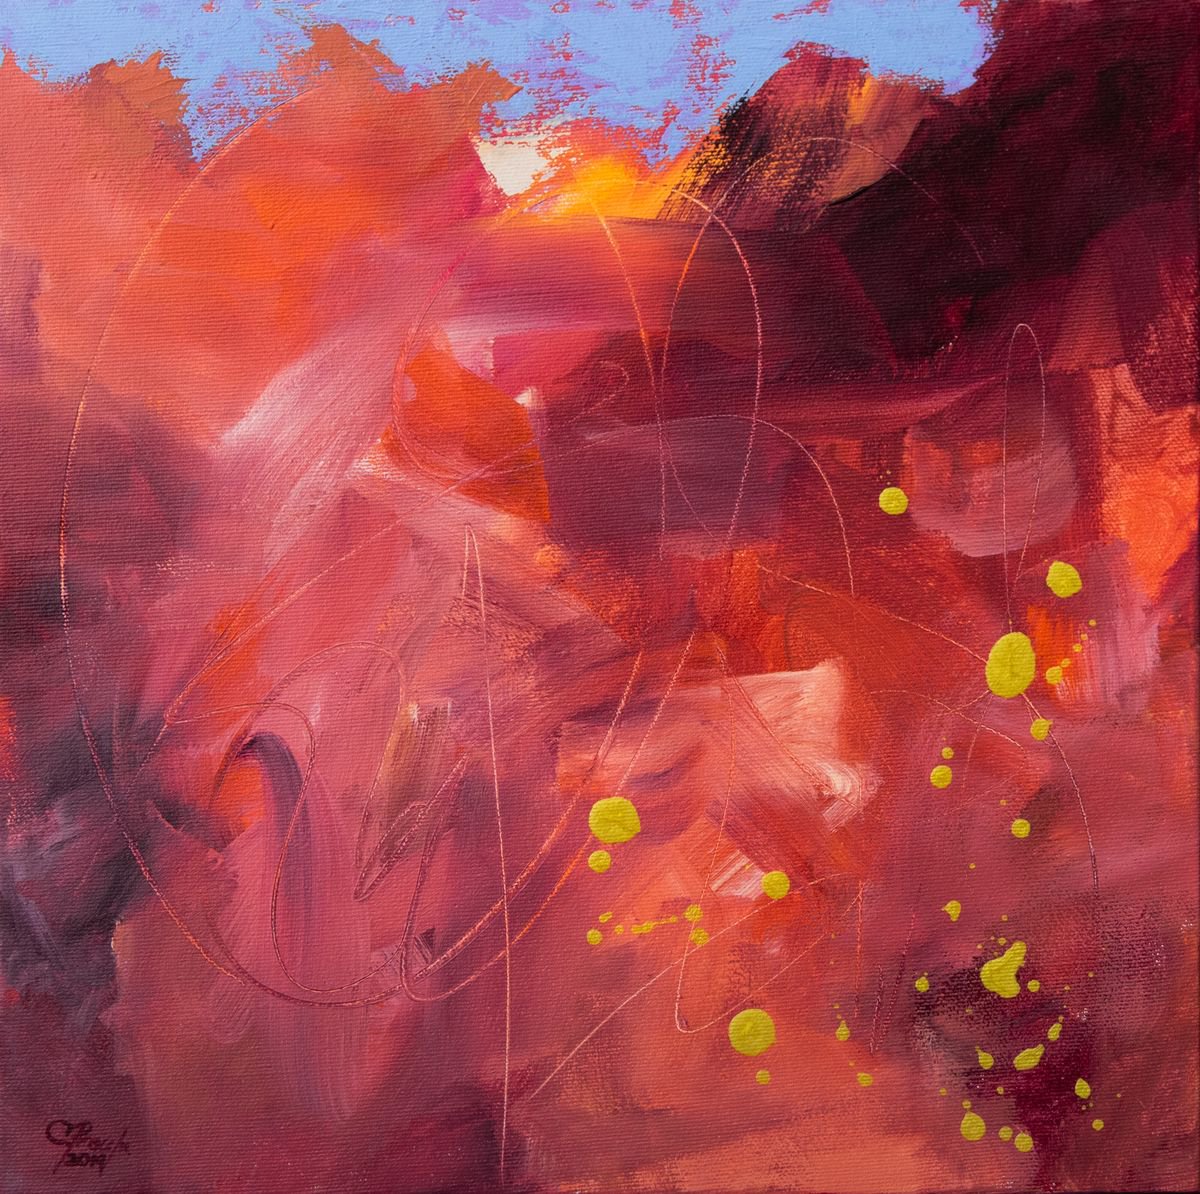 Grande est la paix du desert - Original square abstract expressionist acrylic painting - R... by Chantal Proulx